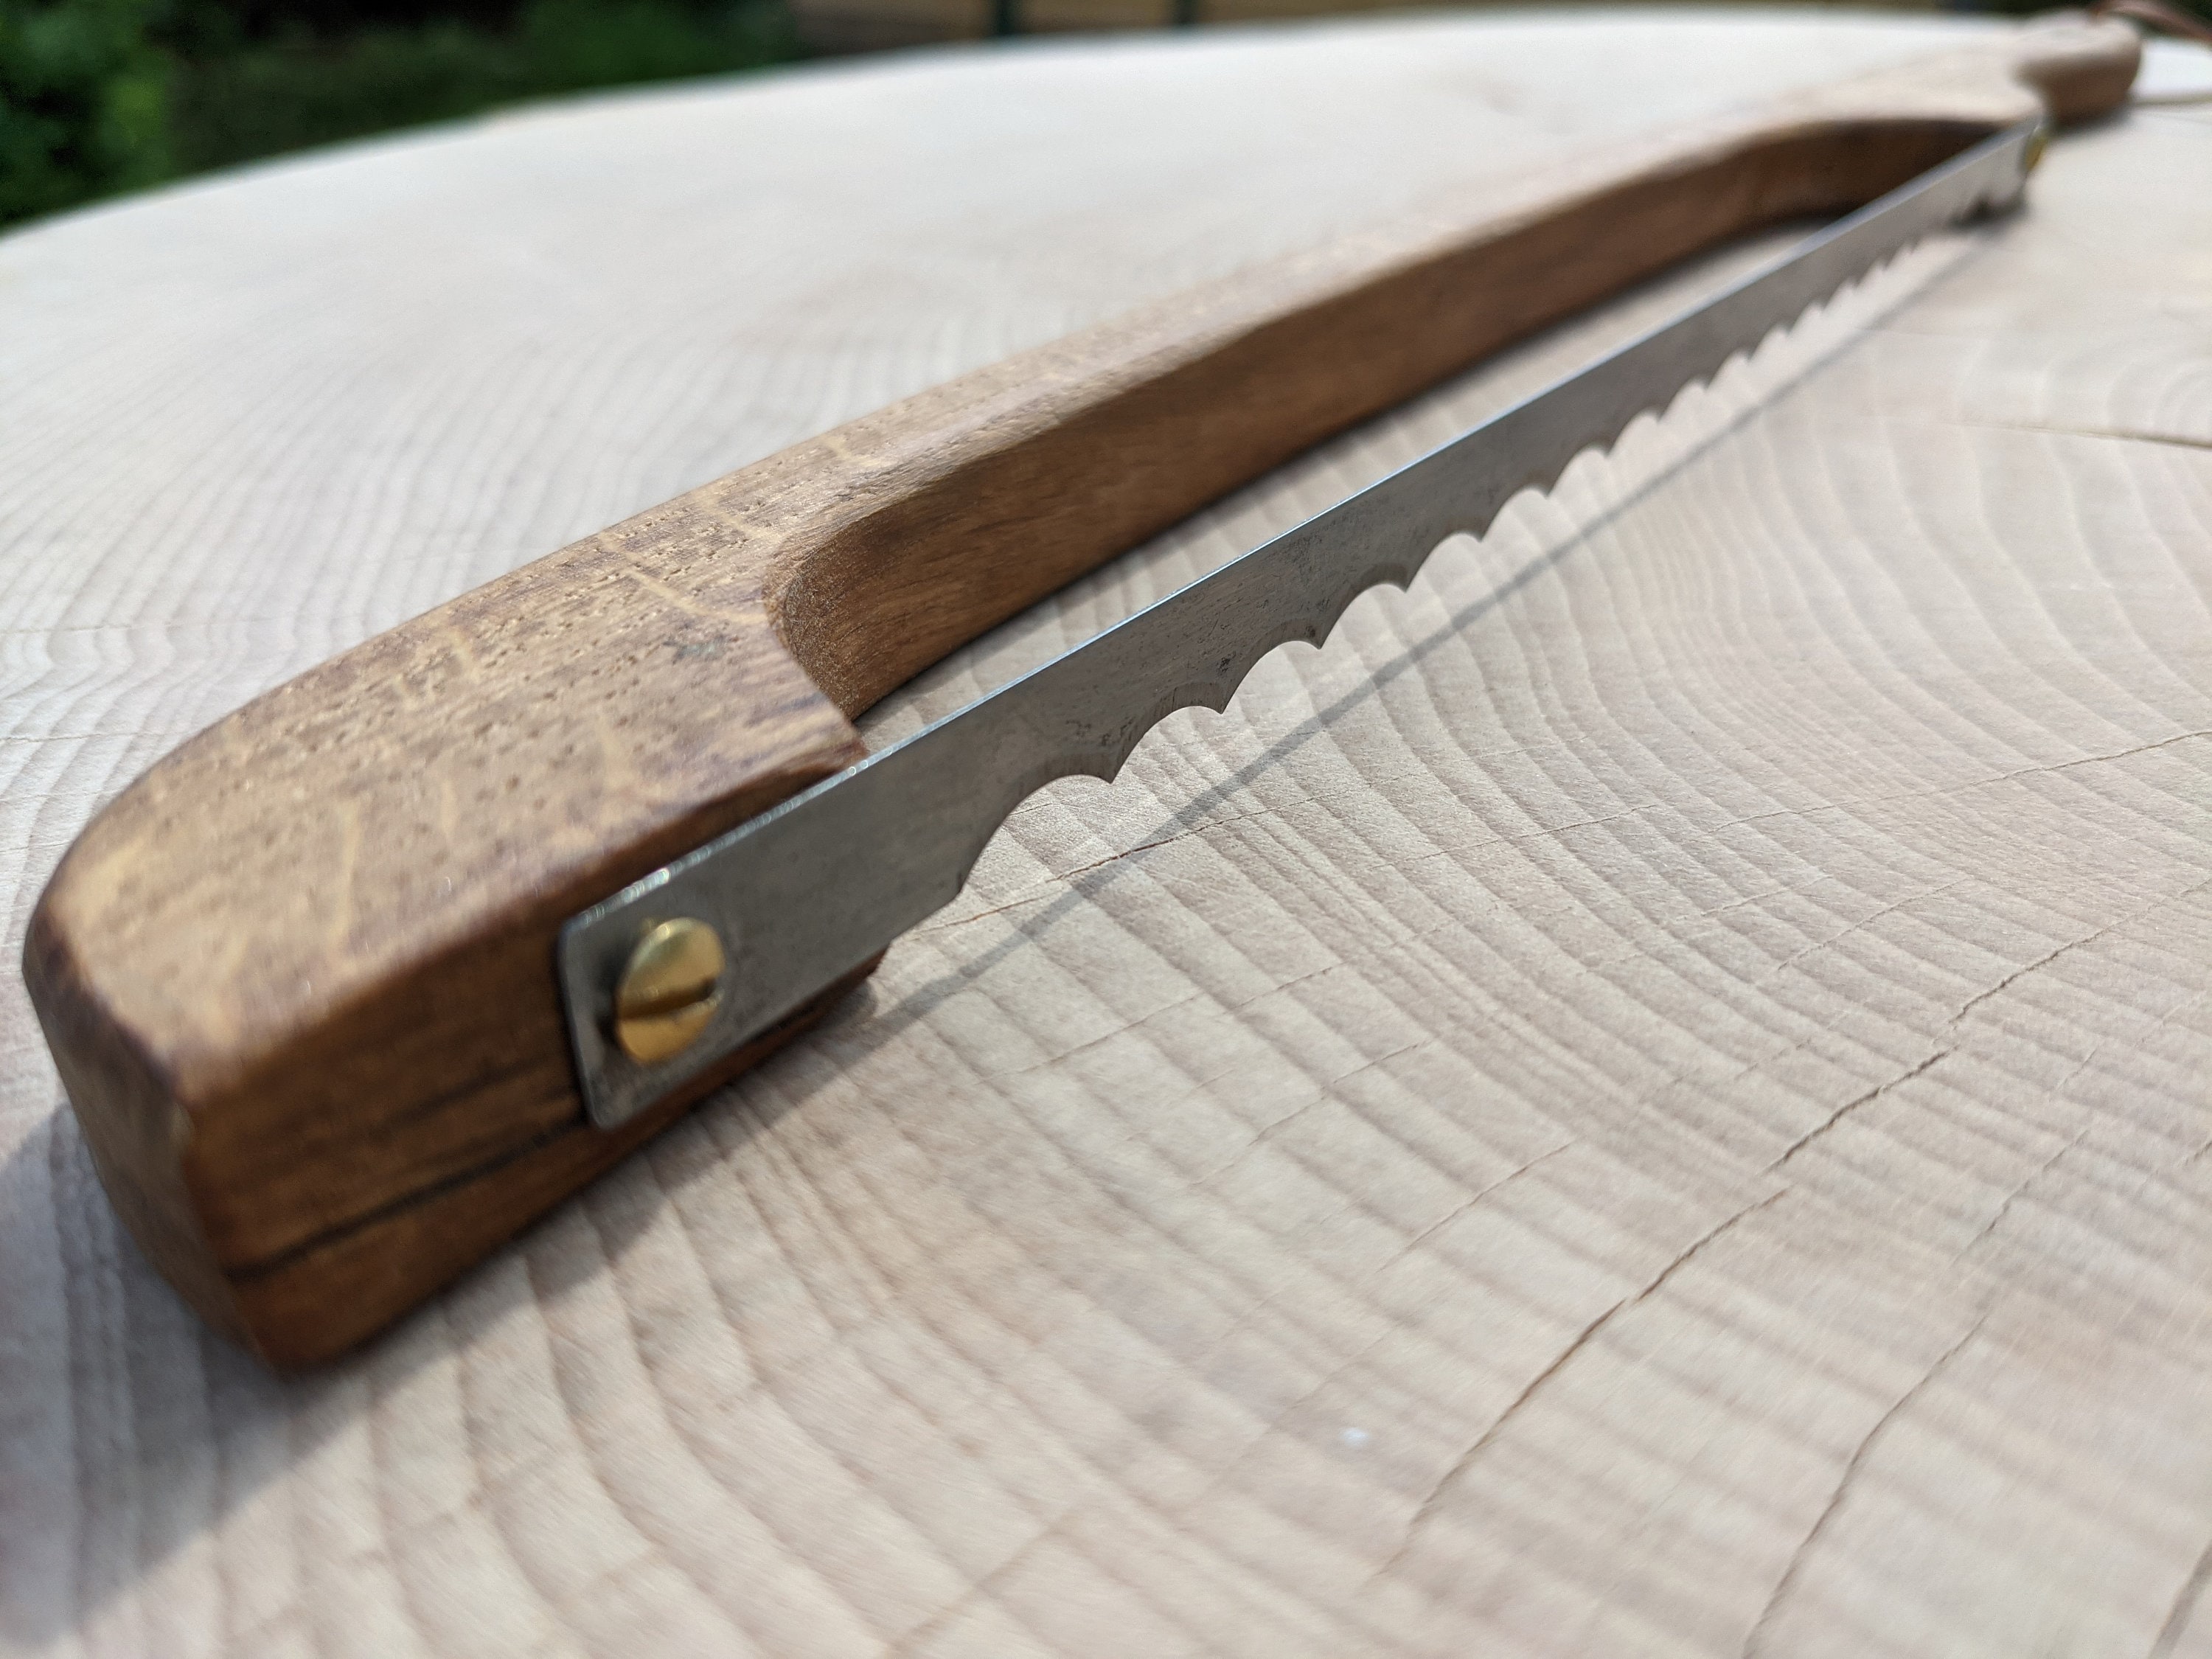 Woodworking Tool 175mm Small Left Handed Japanese Kiridashi Kogatana Utility Knife, with Blade Sheath, for Wood Carving & Bamboo Craft